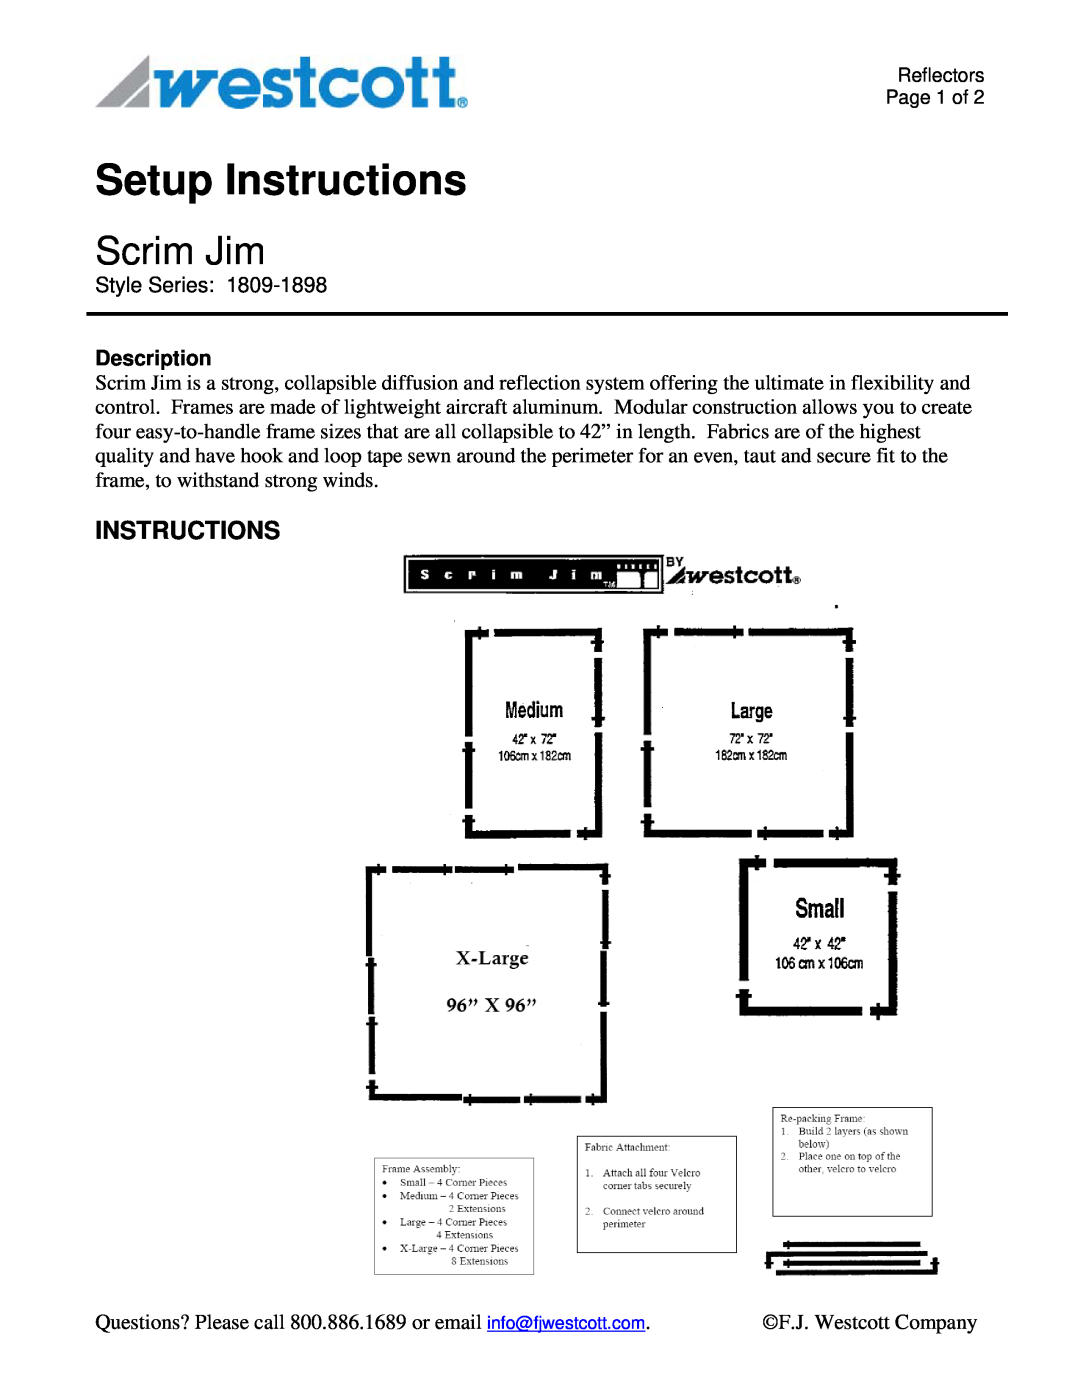 Westcott 1869 manual Setup Instructions, Scrim Jim, Description 